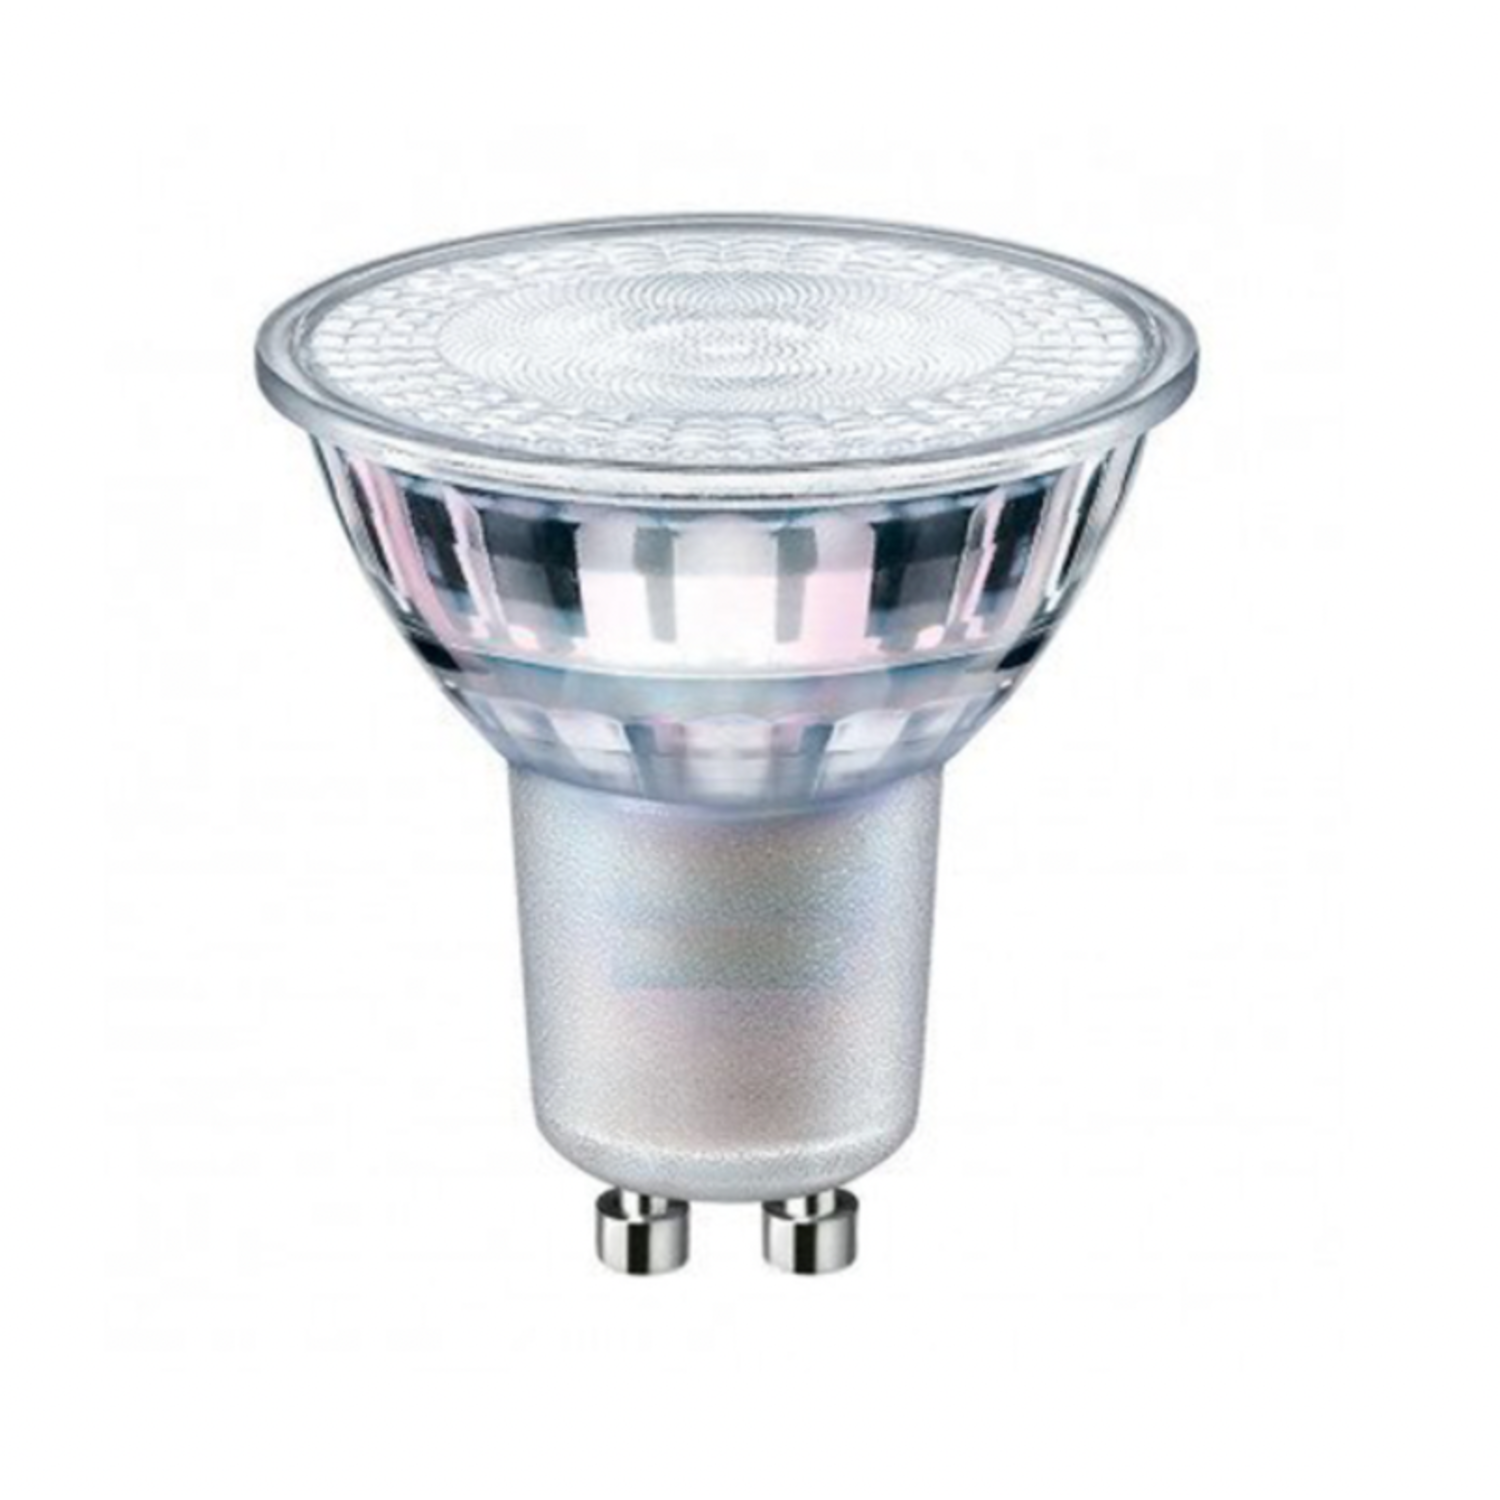 LED spot GU10 - 3W vervangt 30W - warm wit licht - Ledlichtdiscounter.nl